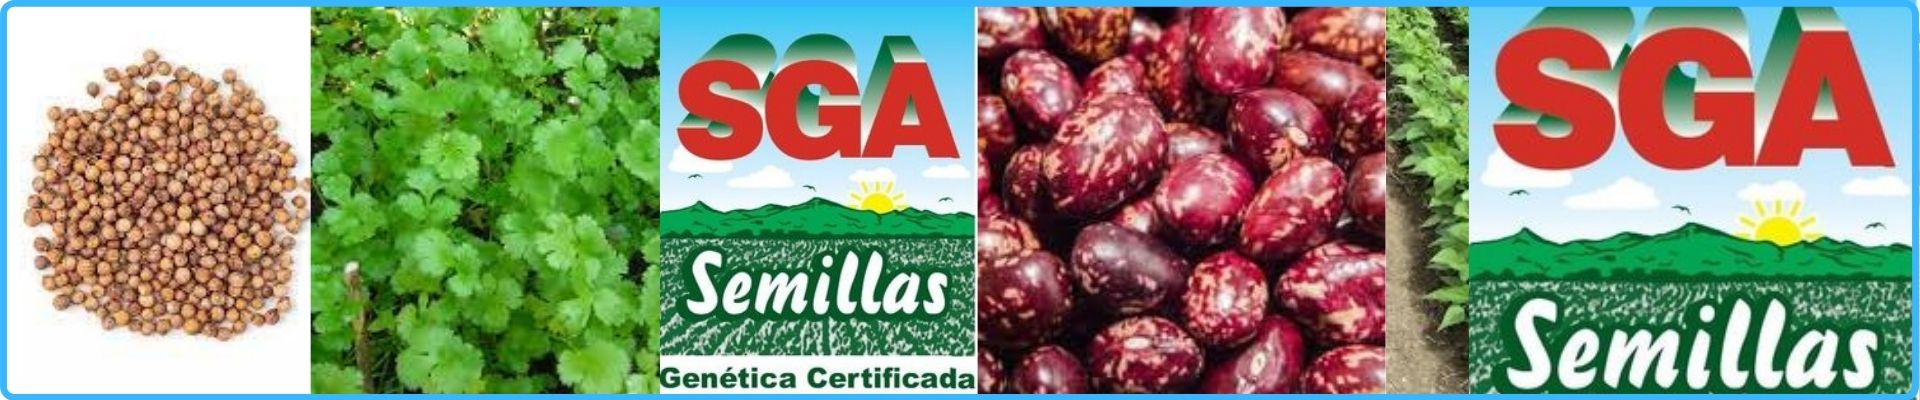 SGA SEmillas agroshow banner